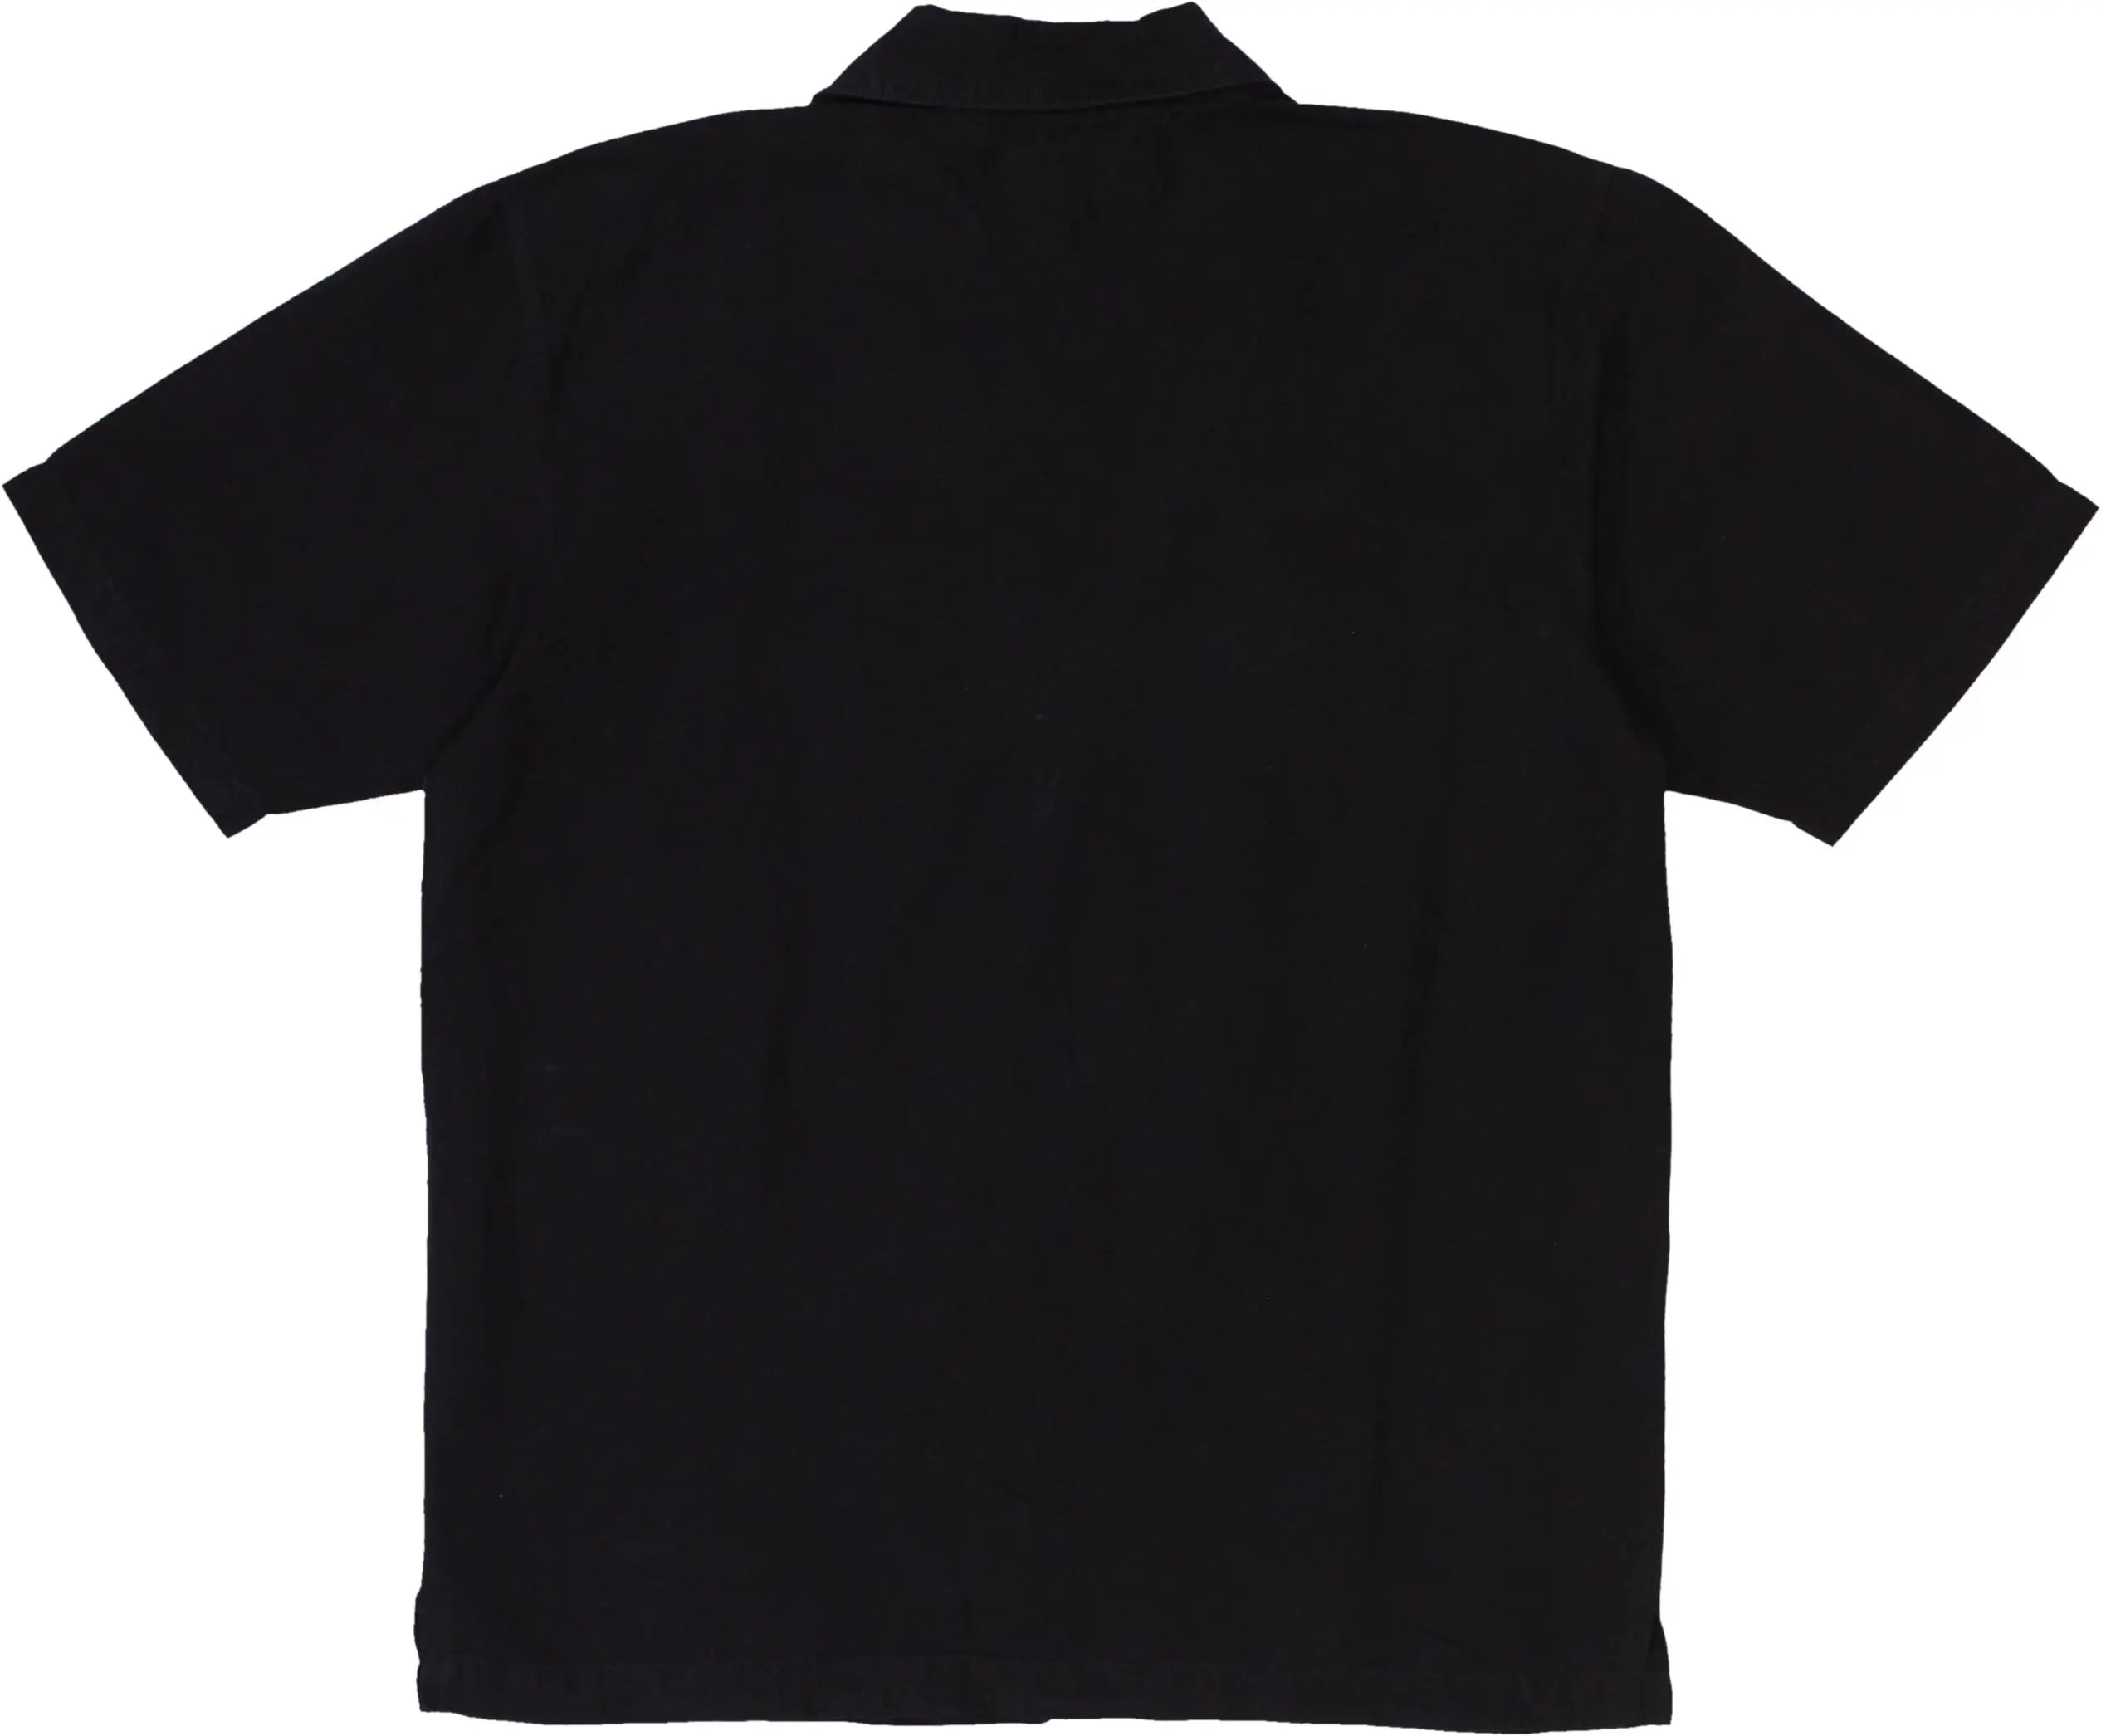 Ralph Lauren - Black Linen Shirt by Ralph Lauren- ThriftTale.com - Vintage and second handclothing